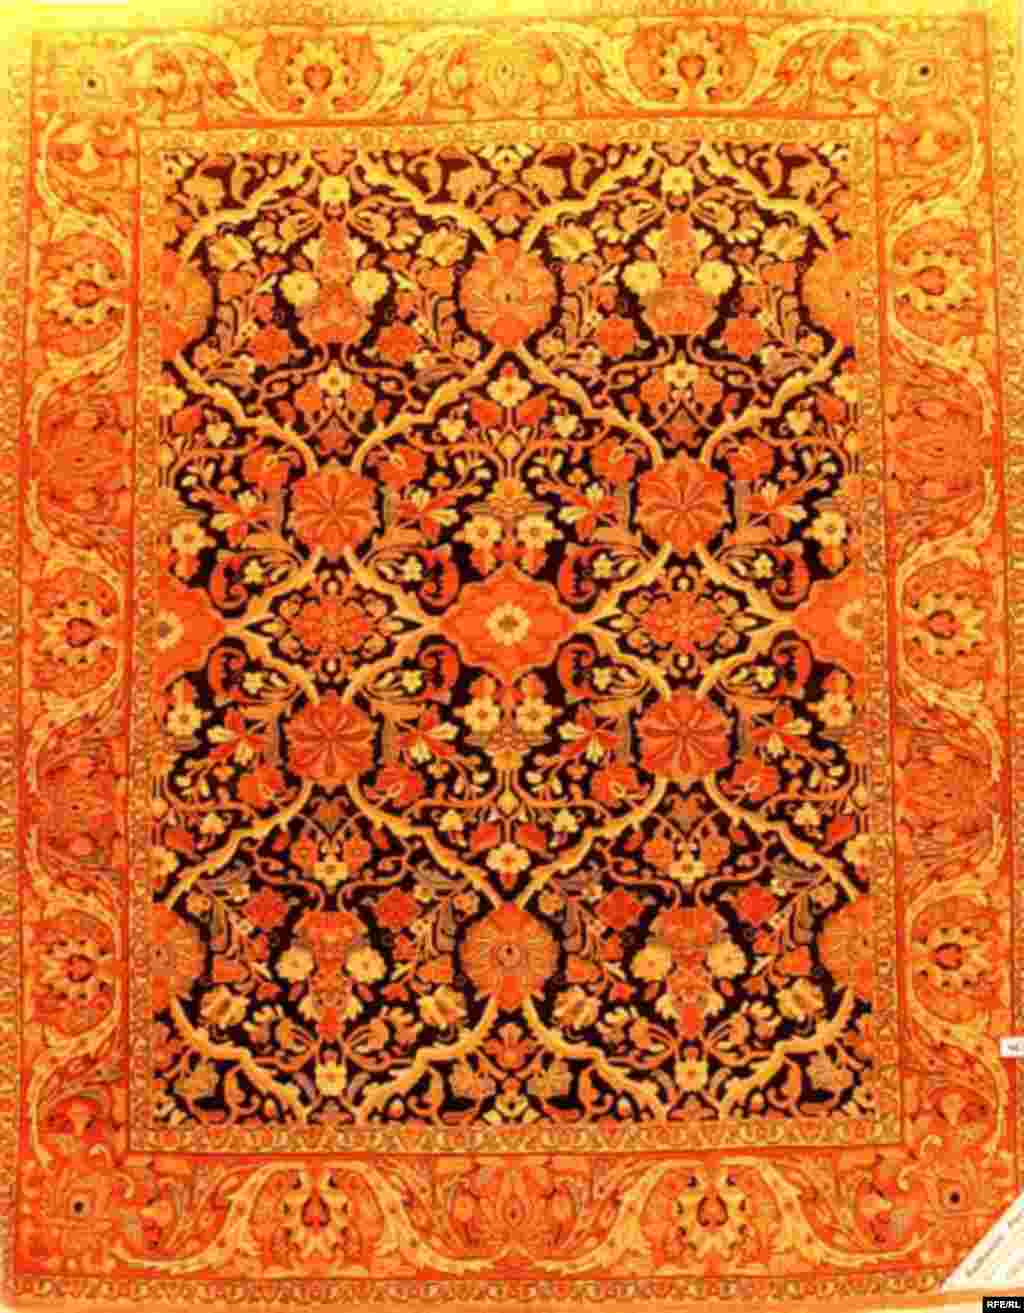 Germany -- carpet - rug1